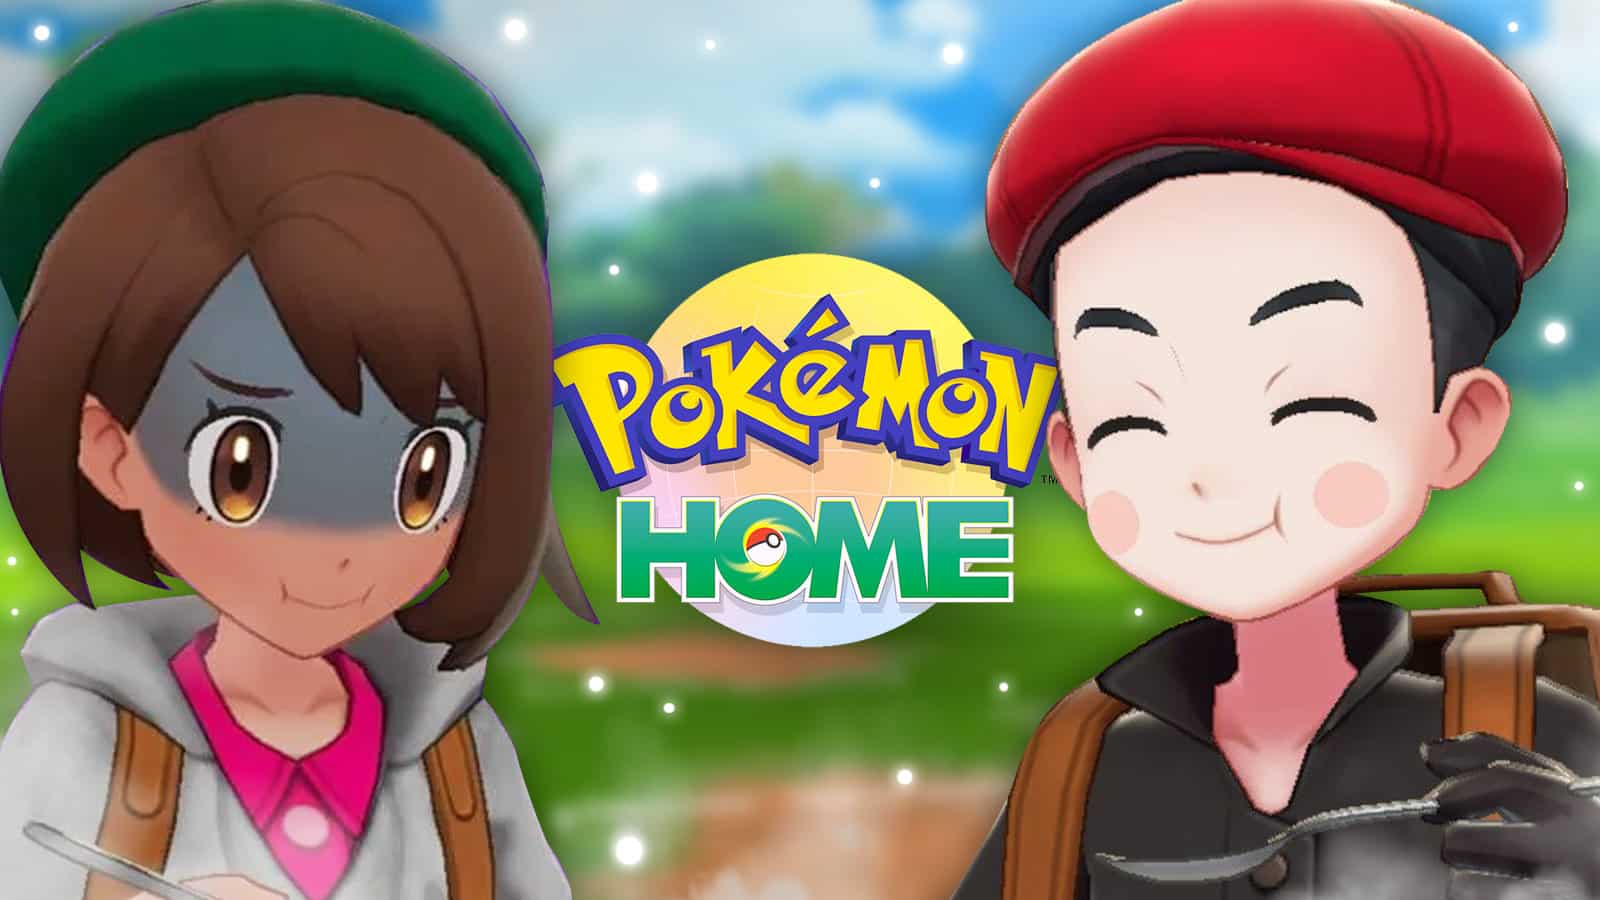 Pokemon home